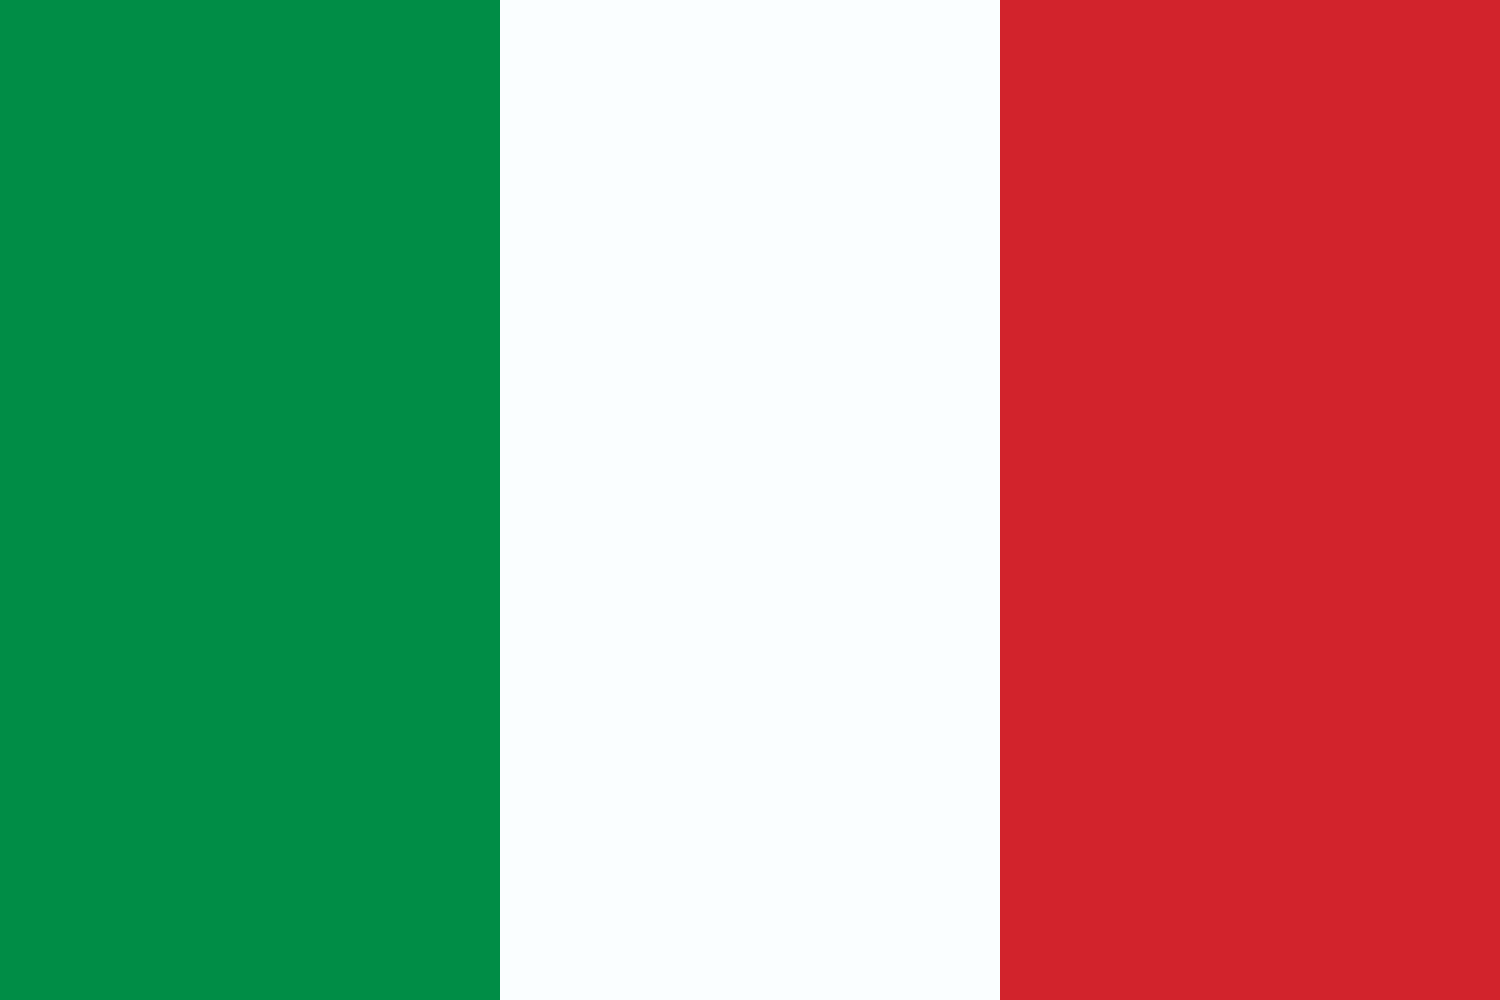 Italy Flag Printable